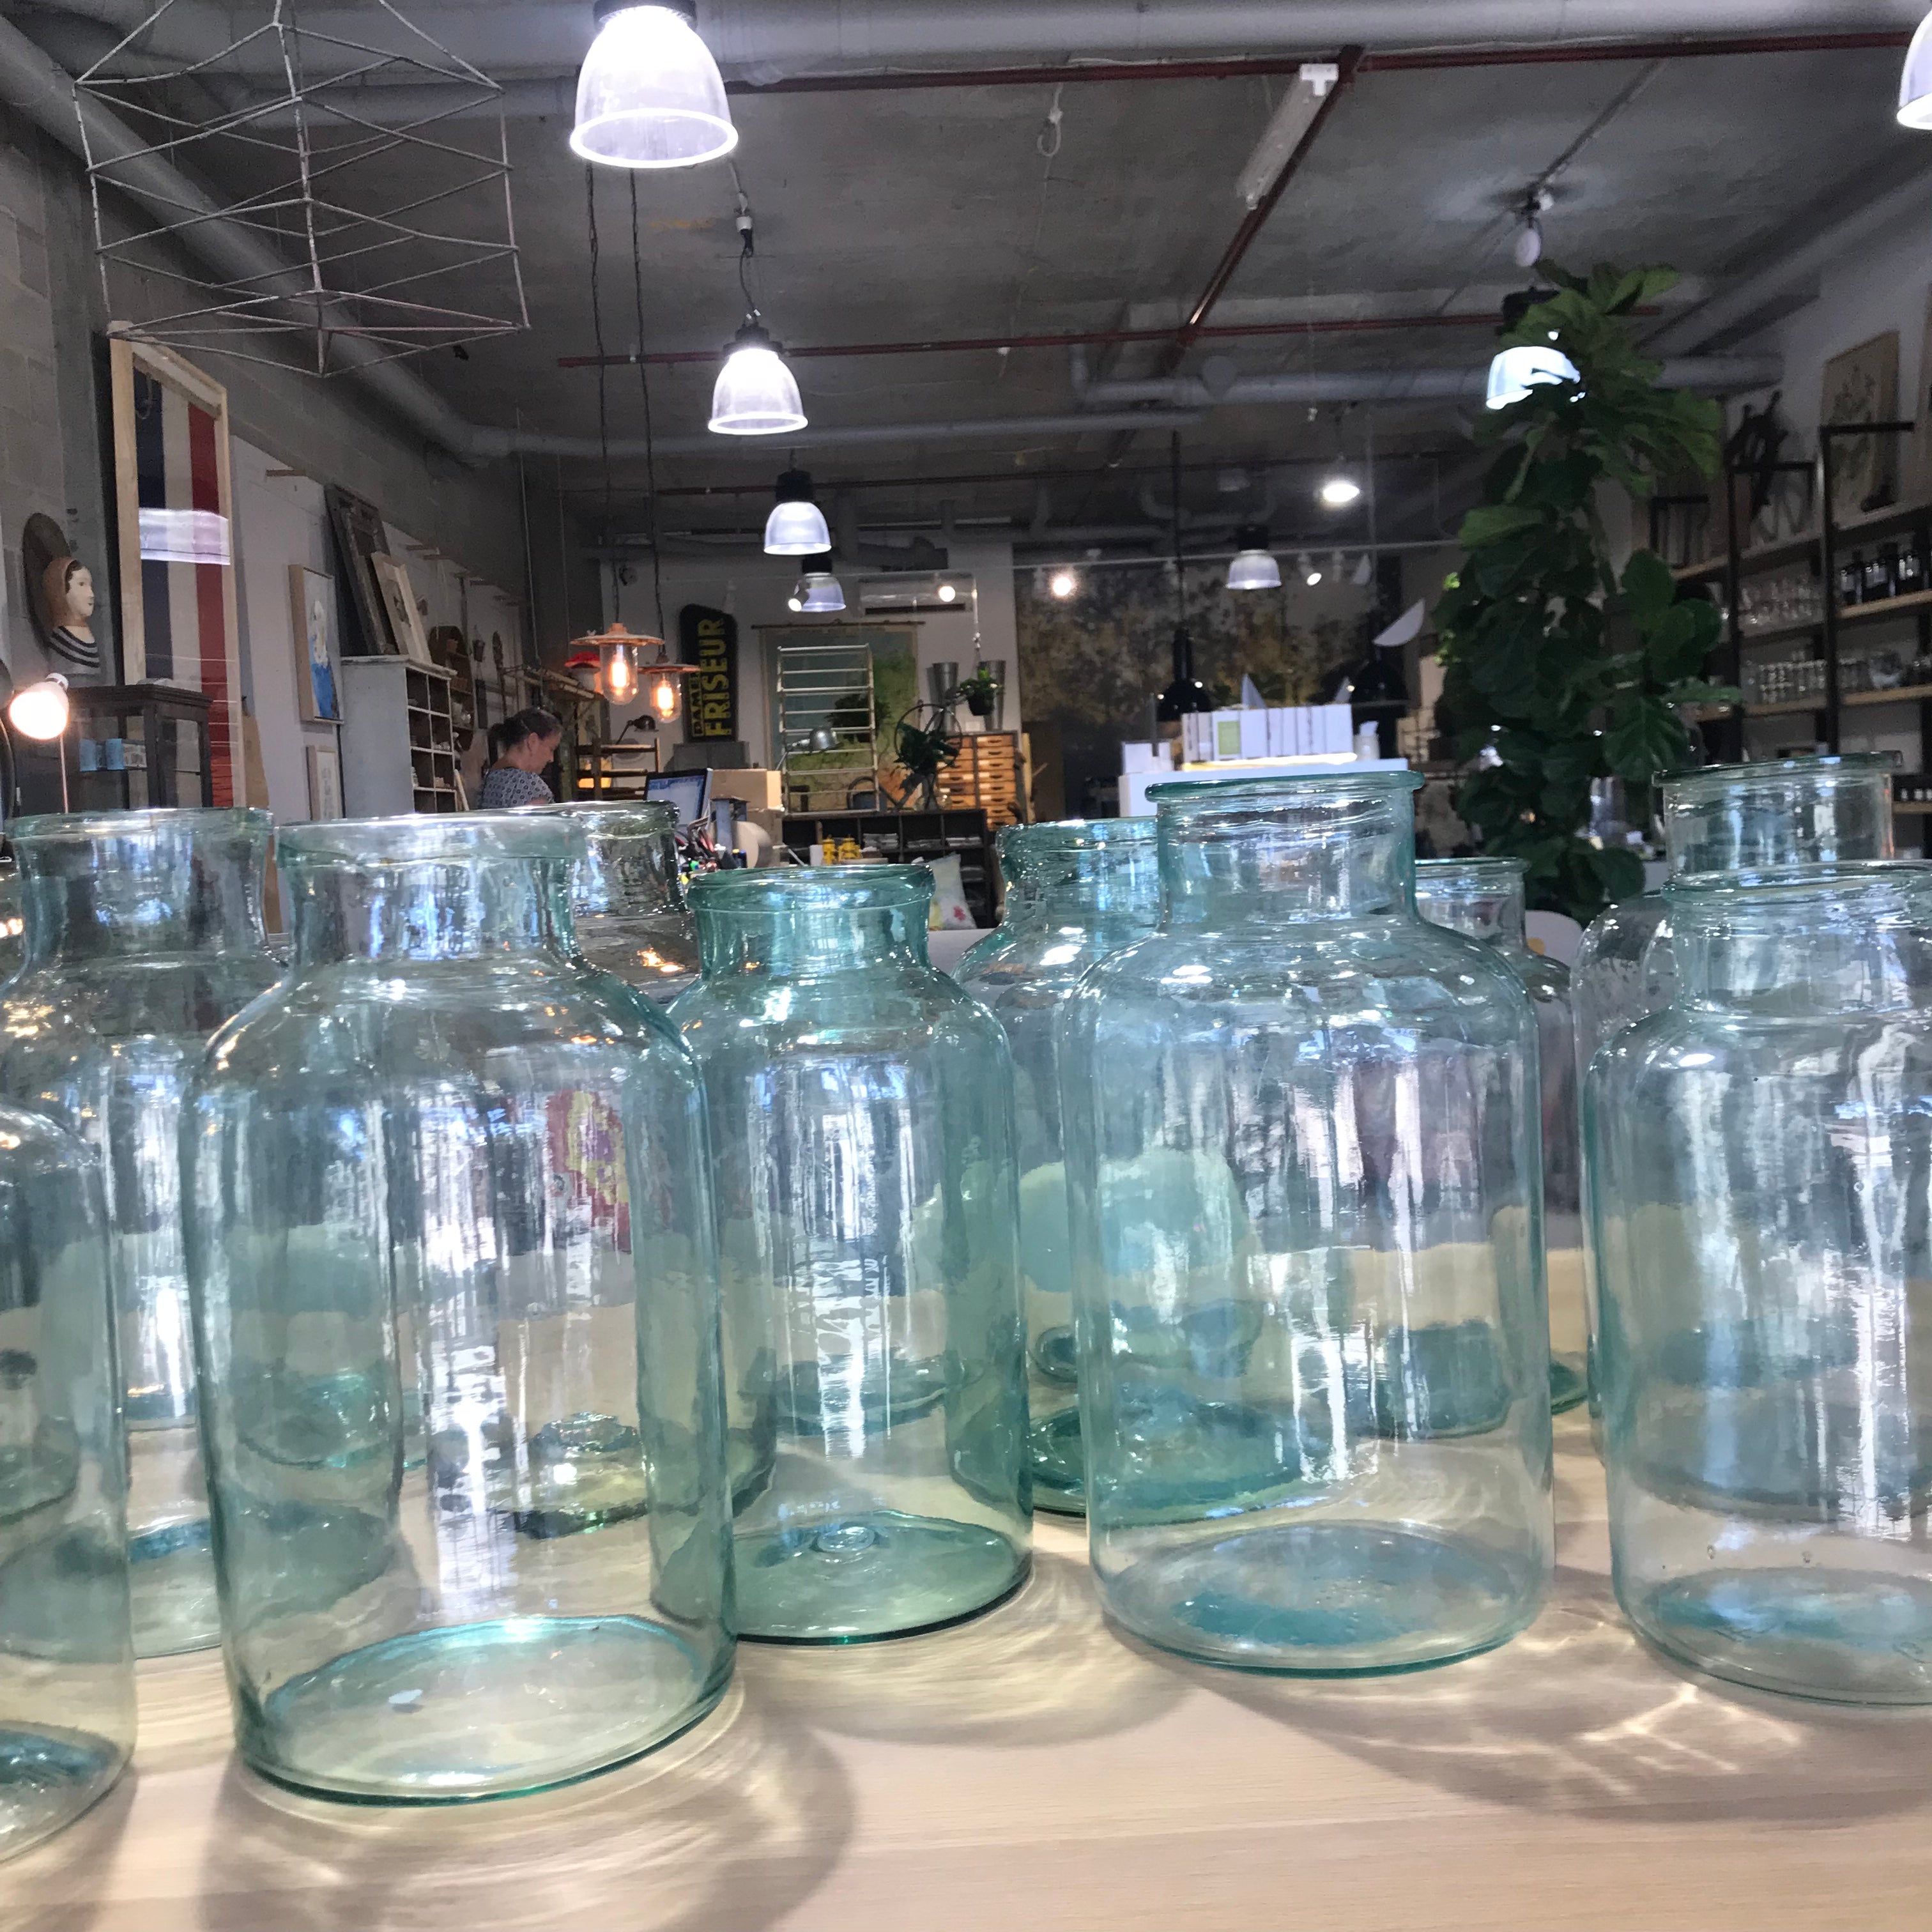 European Blue Glass Large Pickle Jar